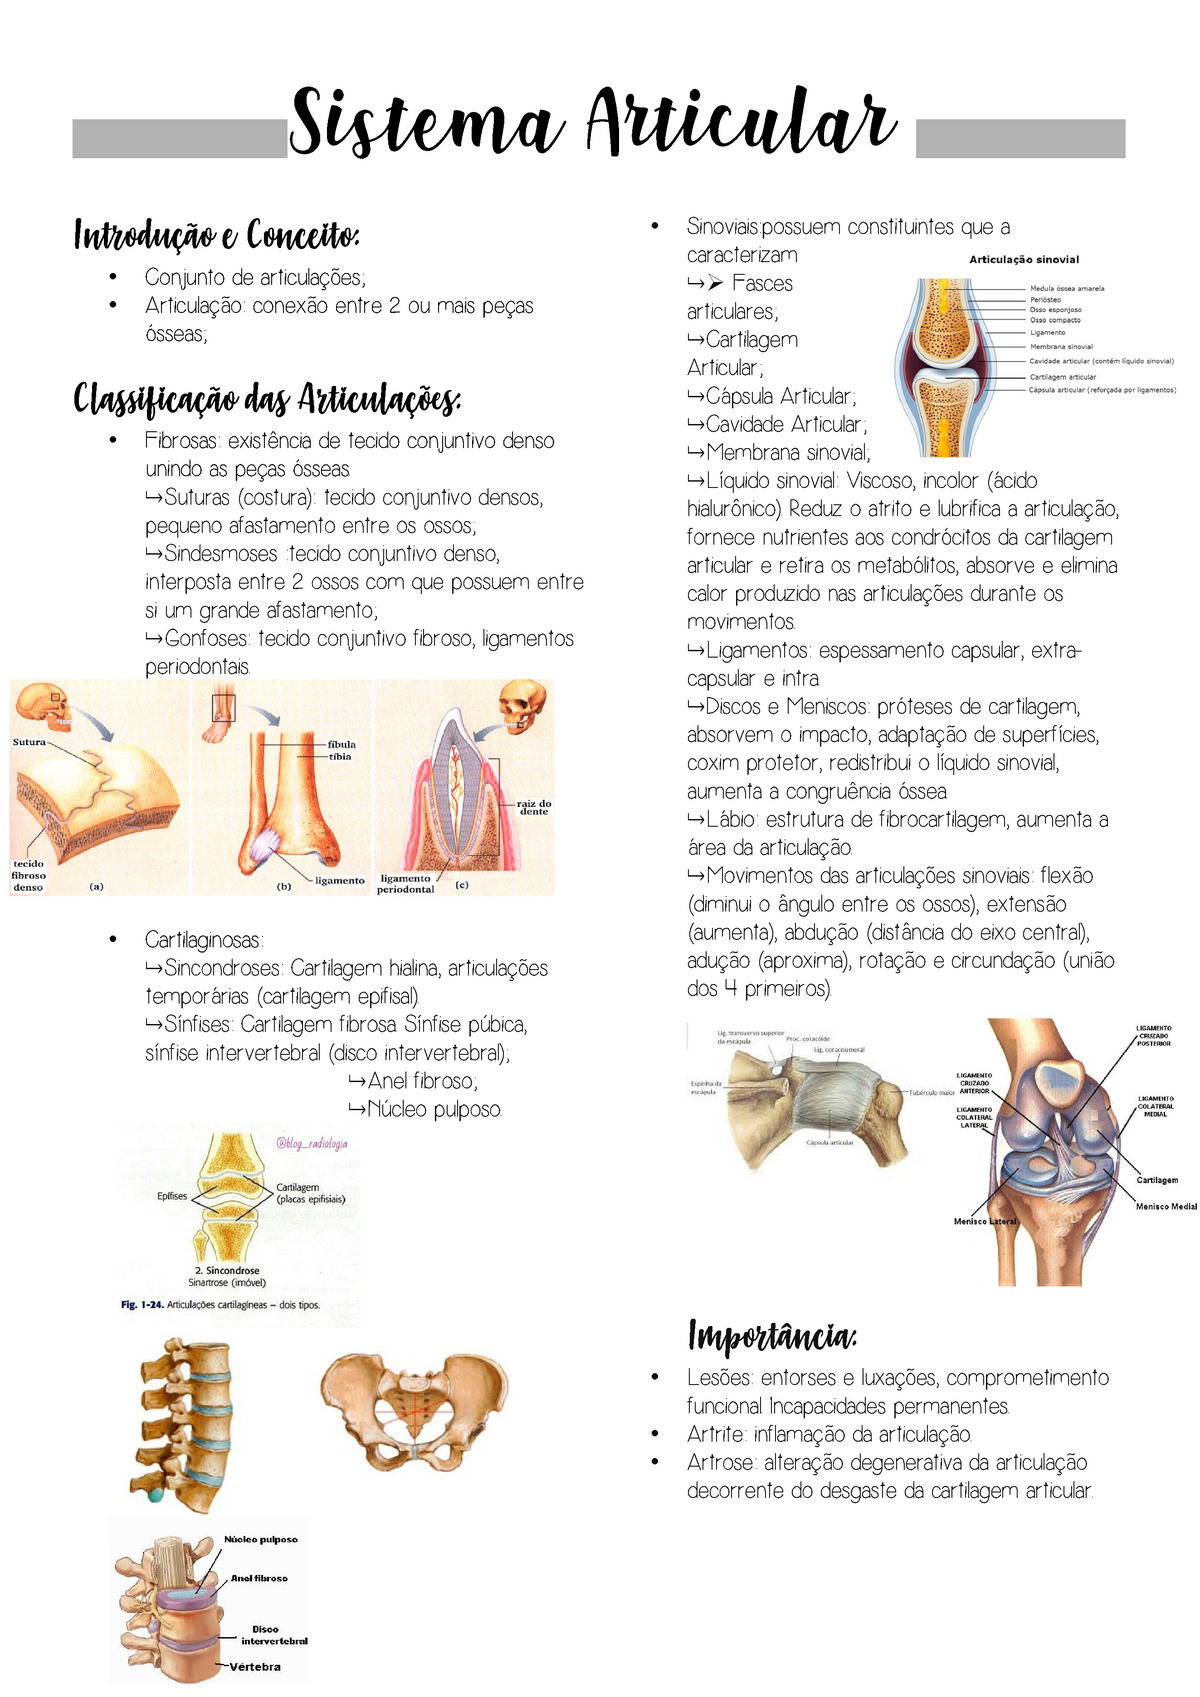 Aticular Resumo De Sistema Articular Sistema Articular